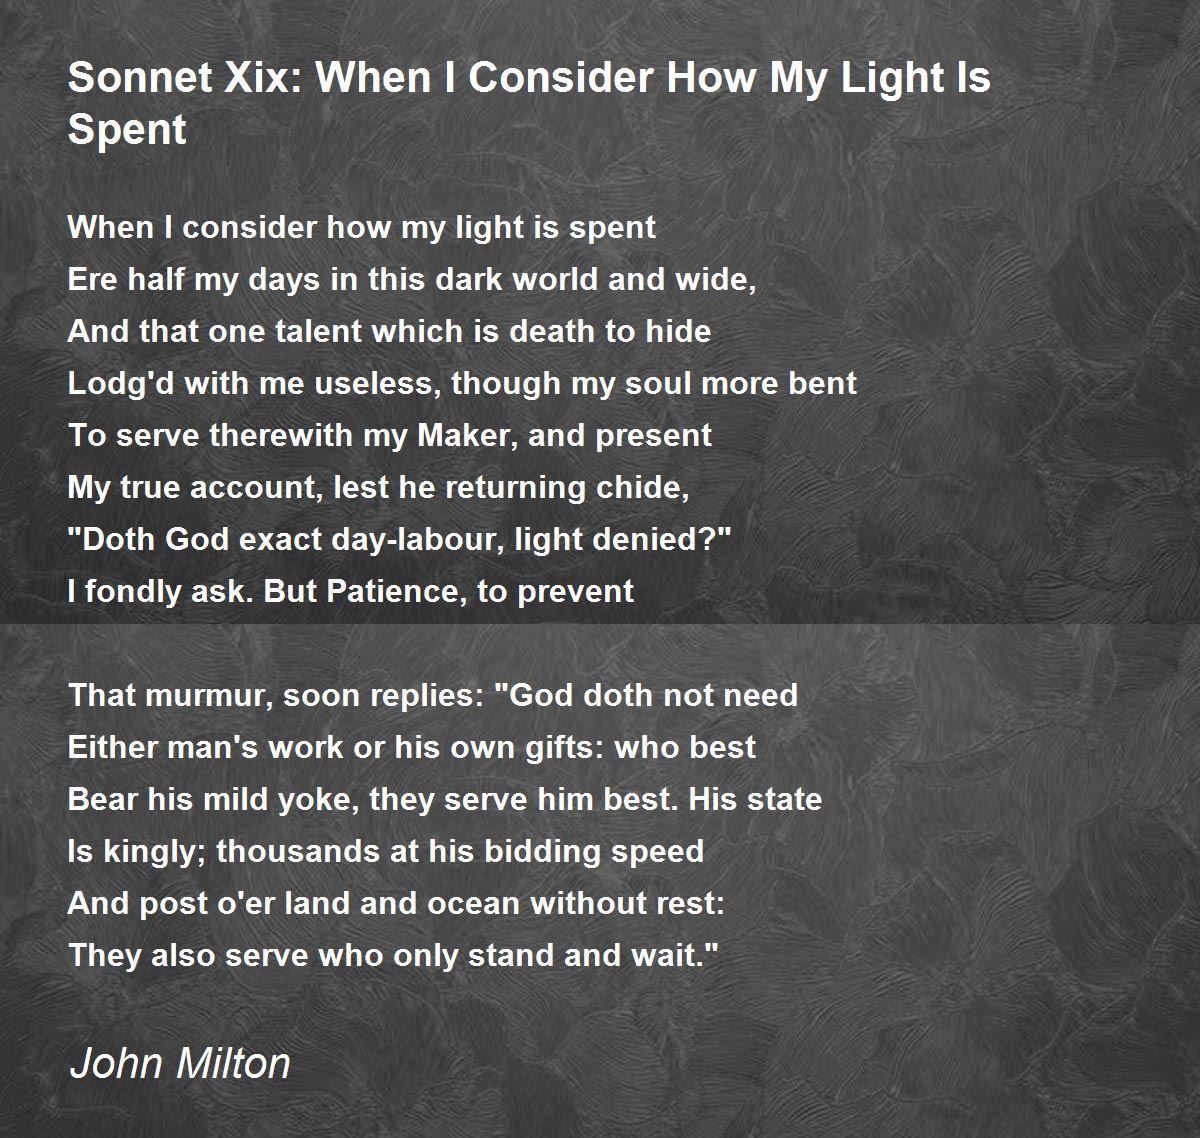 Sonnet Xix: When I Consider My Light Is Spent - Sonnet Xix: When I Consider How Light Is Spent by John Milton